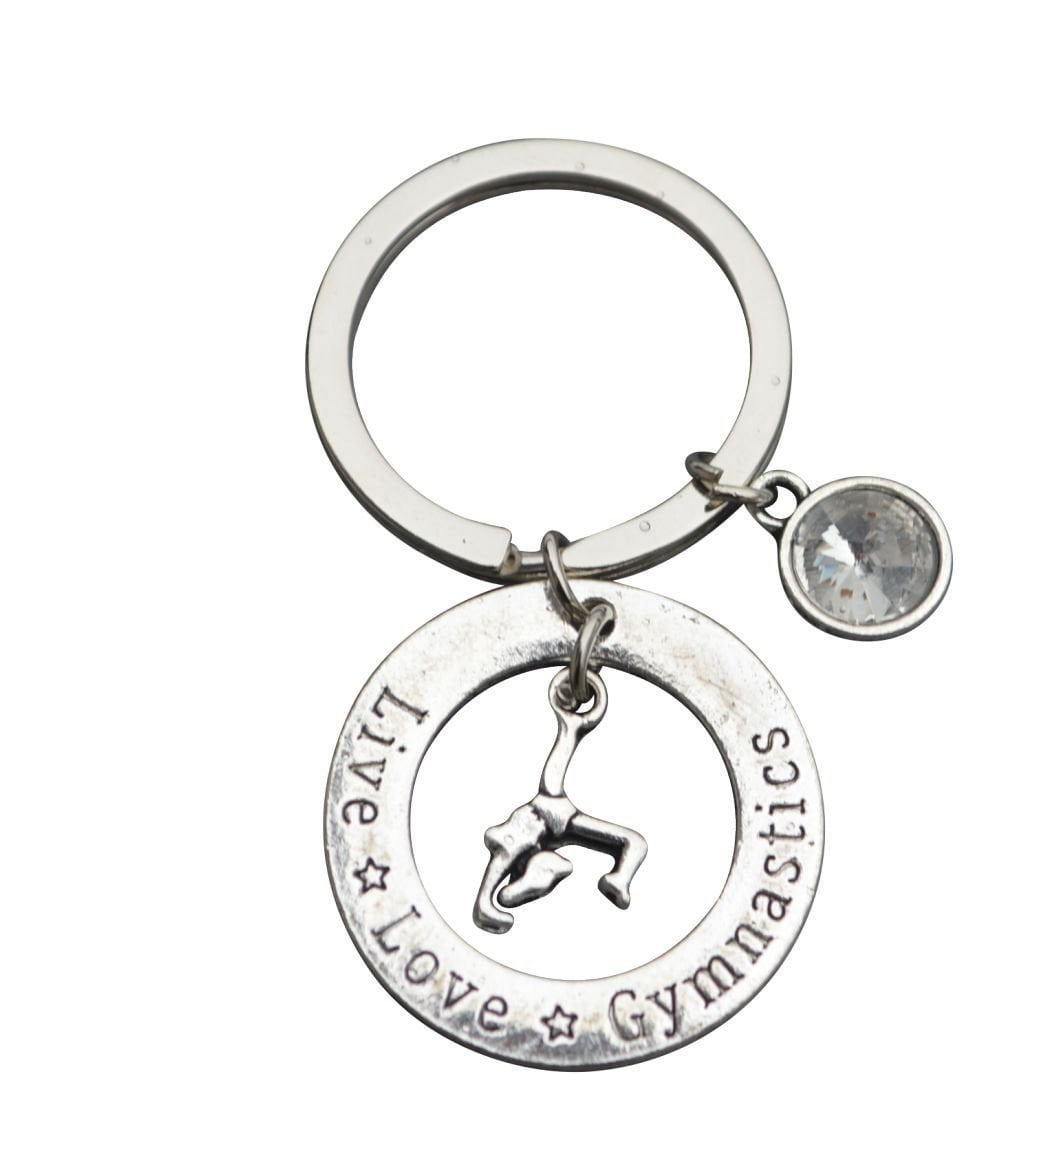 Details about   2017 fashion I Love Gymnastics keychain women men jewelry charms key ring #59 